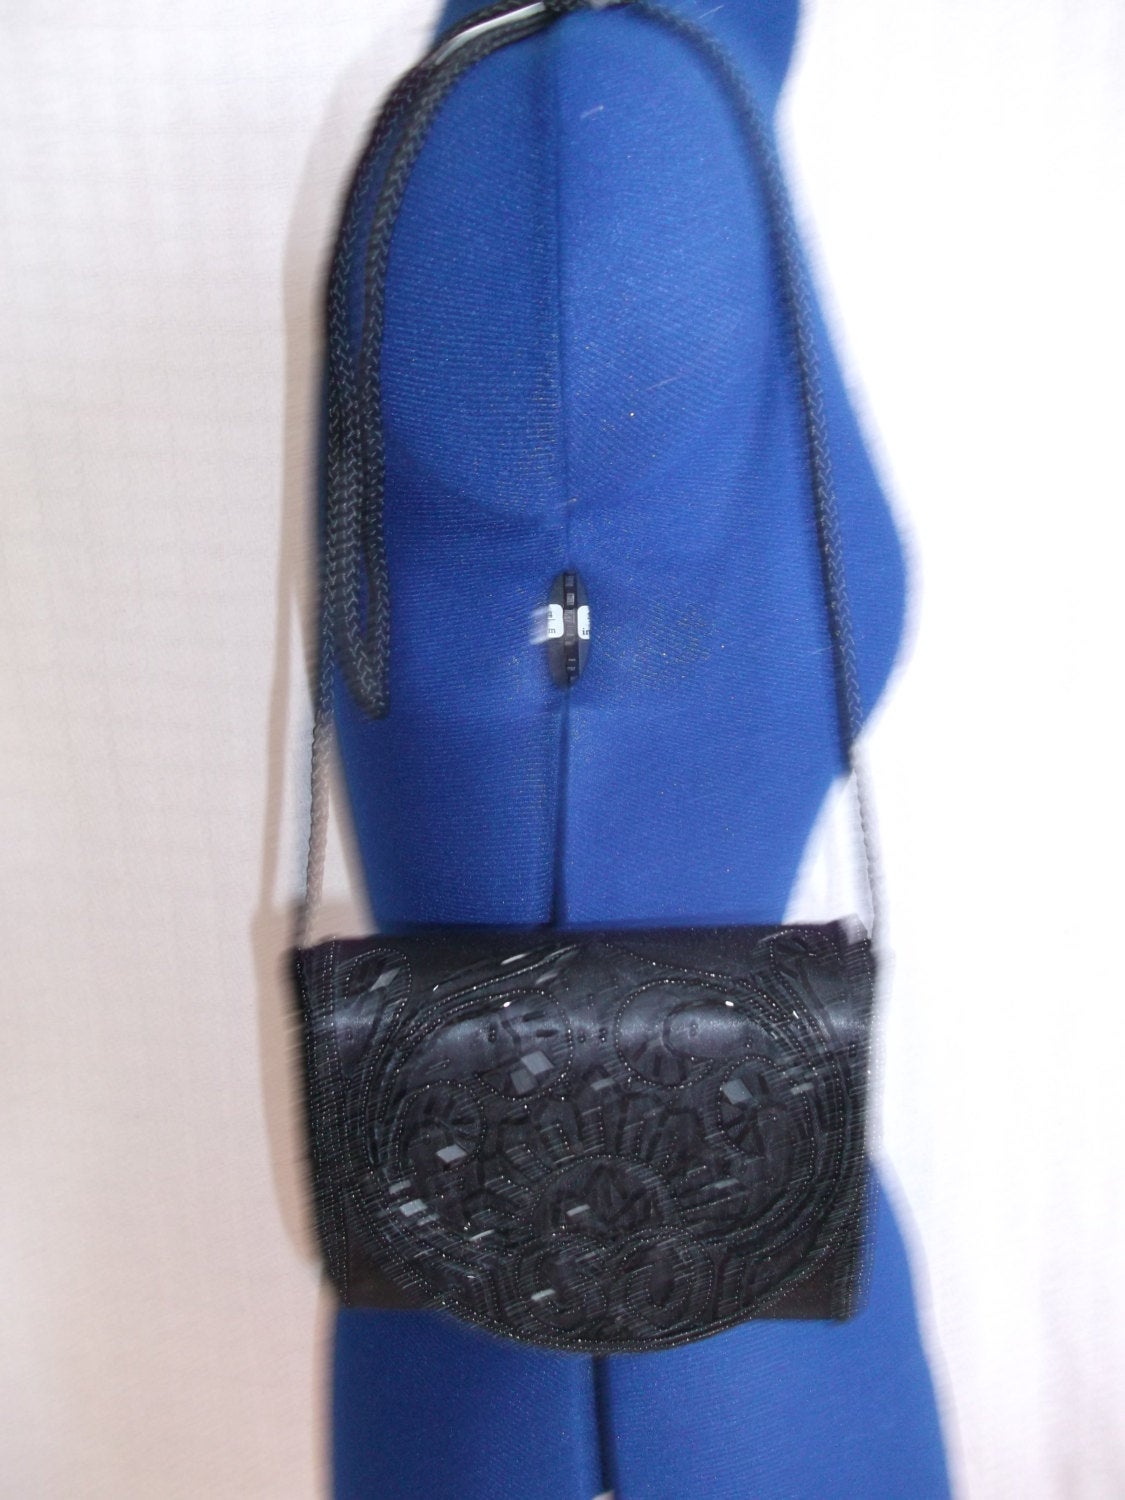 VIntage Glam Unusual black satin shoulder/clutch bag with beadwork detail, fab gift item or party wear accessory Wonkey Donkey Bazaar